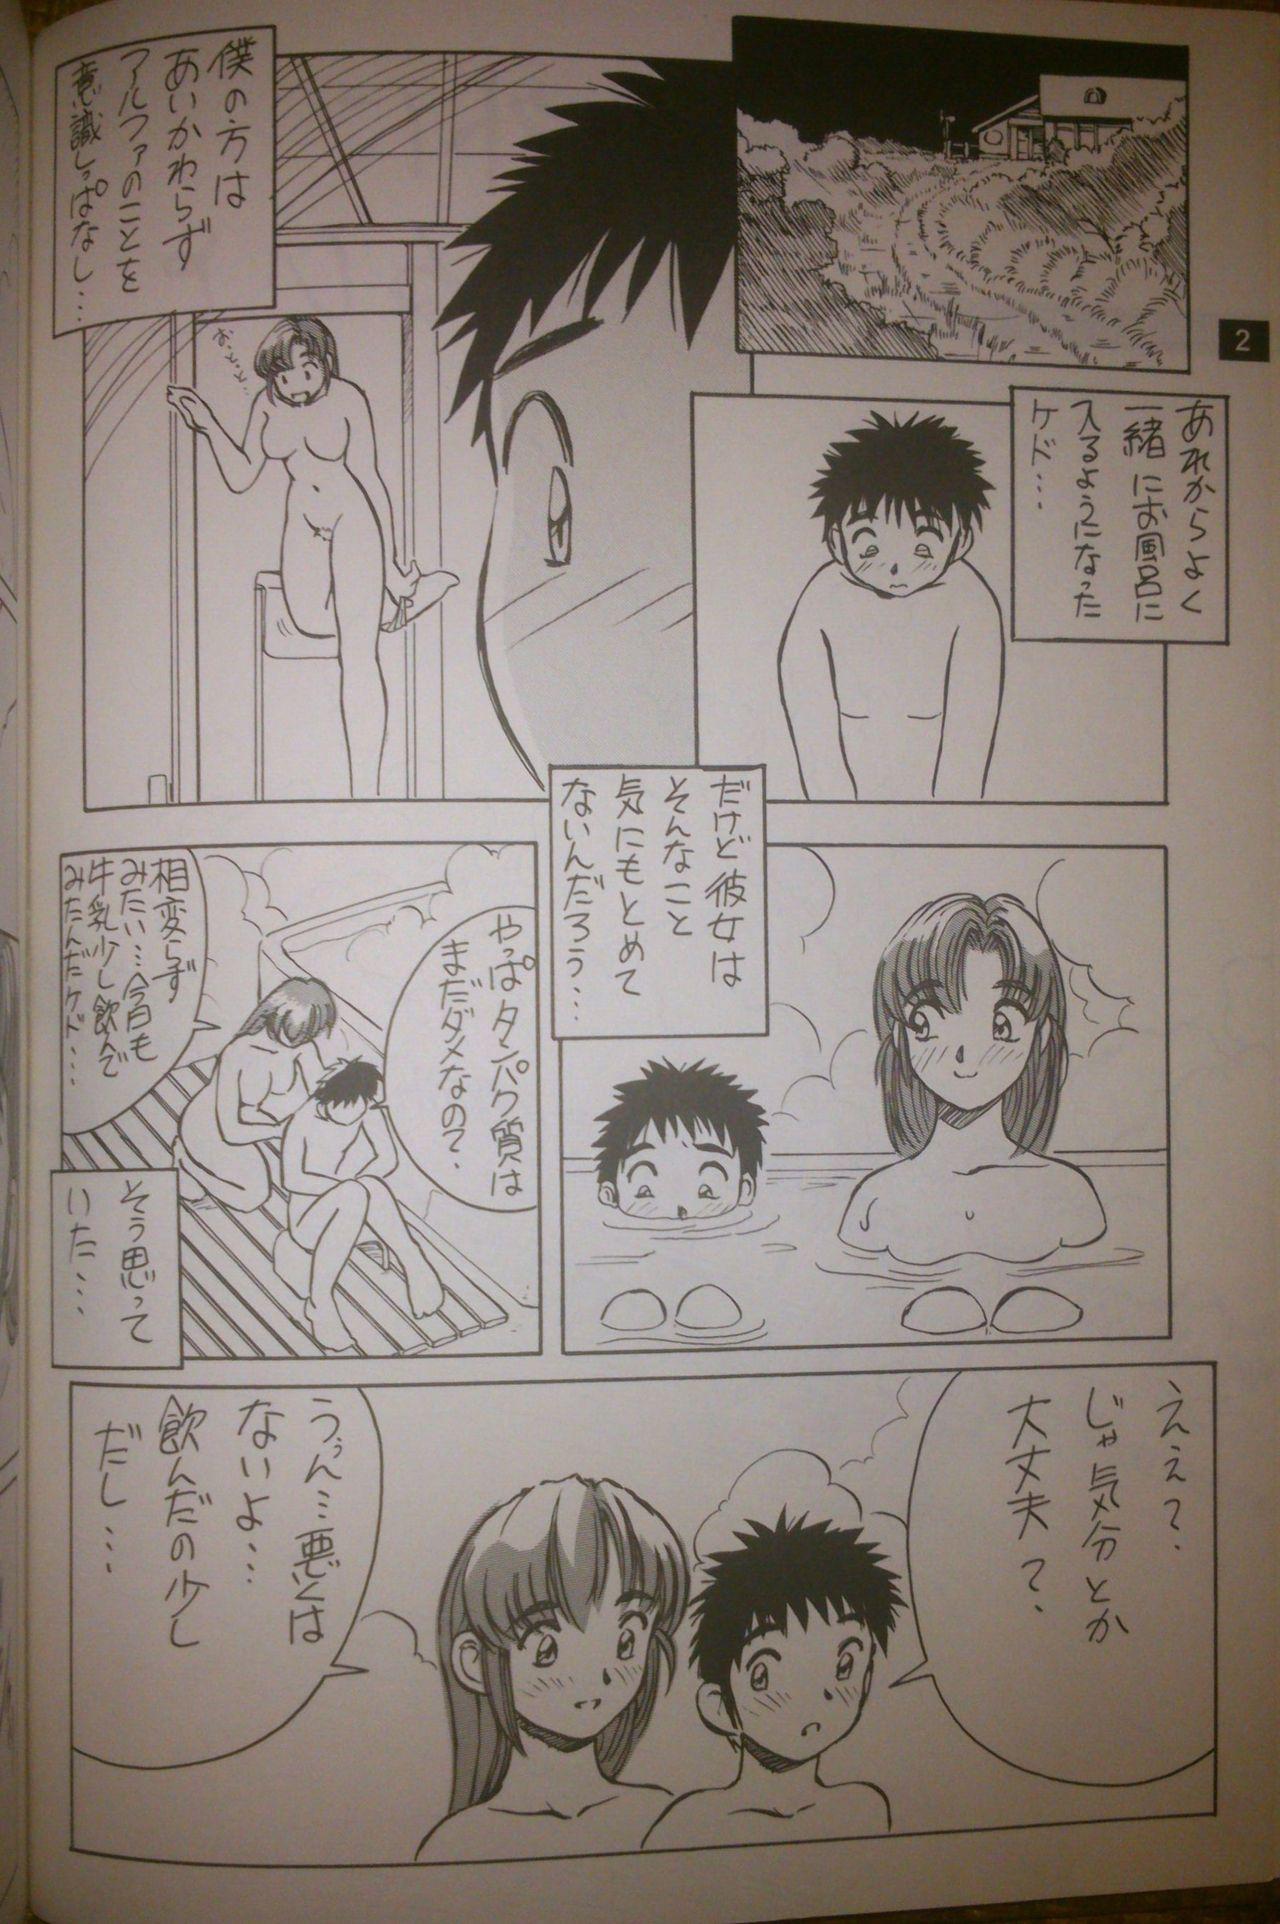 Hot Artifitial Humanity Tankyuusha Vol. 2 - Yokohama kaidashi kikou Panocha - Page 3